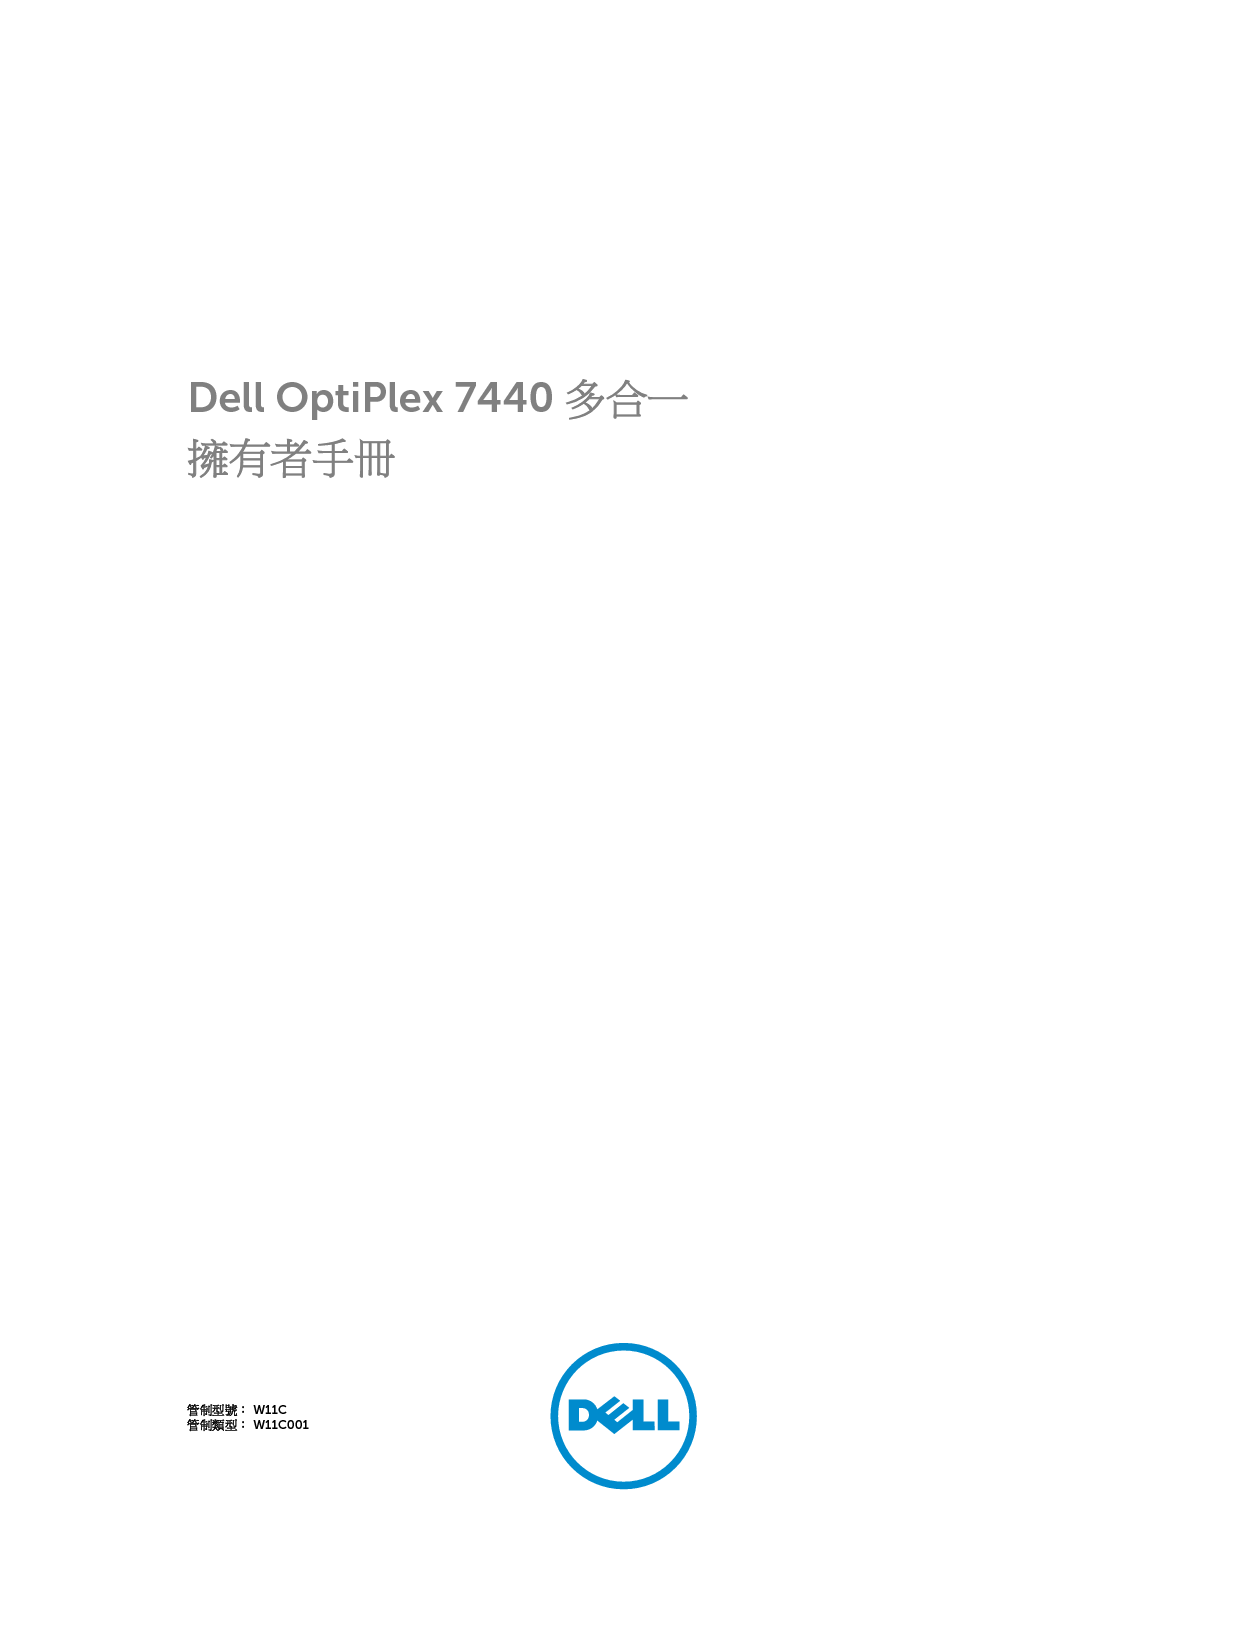 戴尔 Dell Optiplex 7440 AIO 用户指南 封面